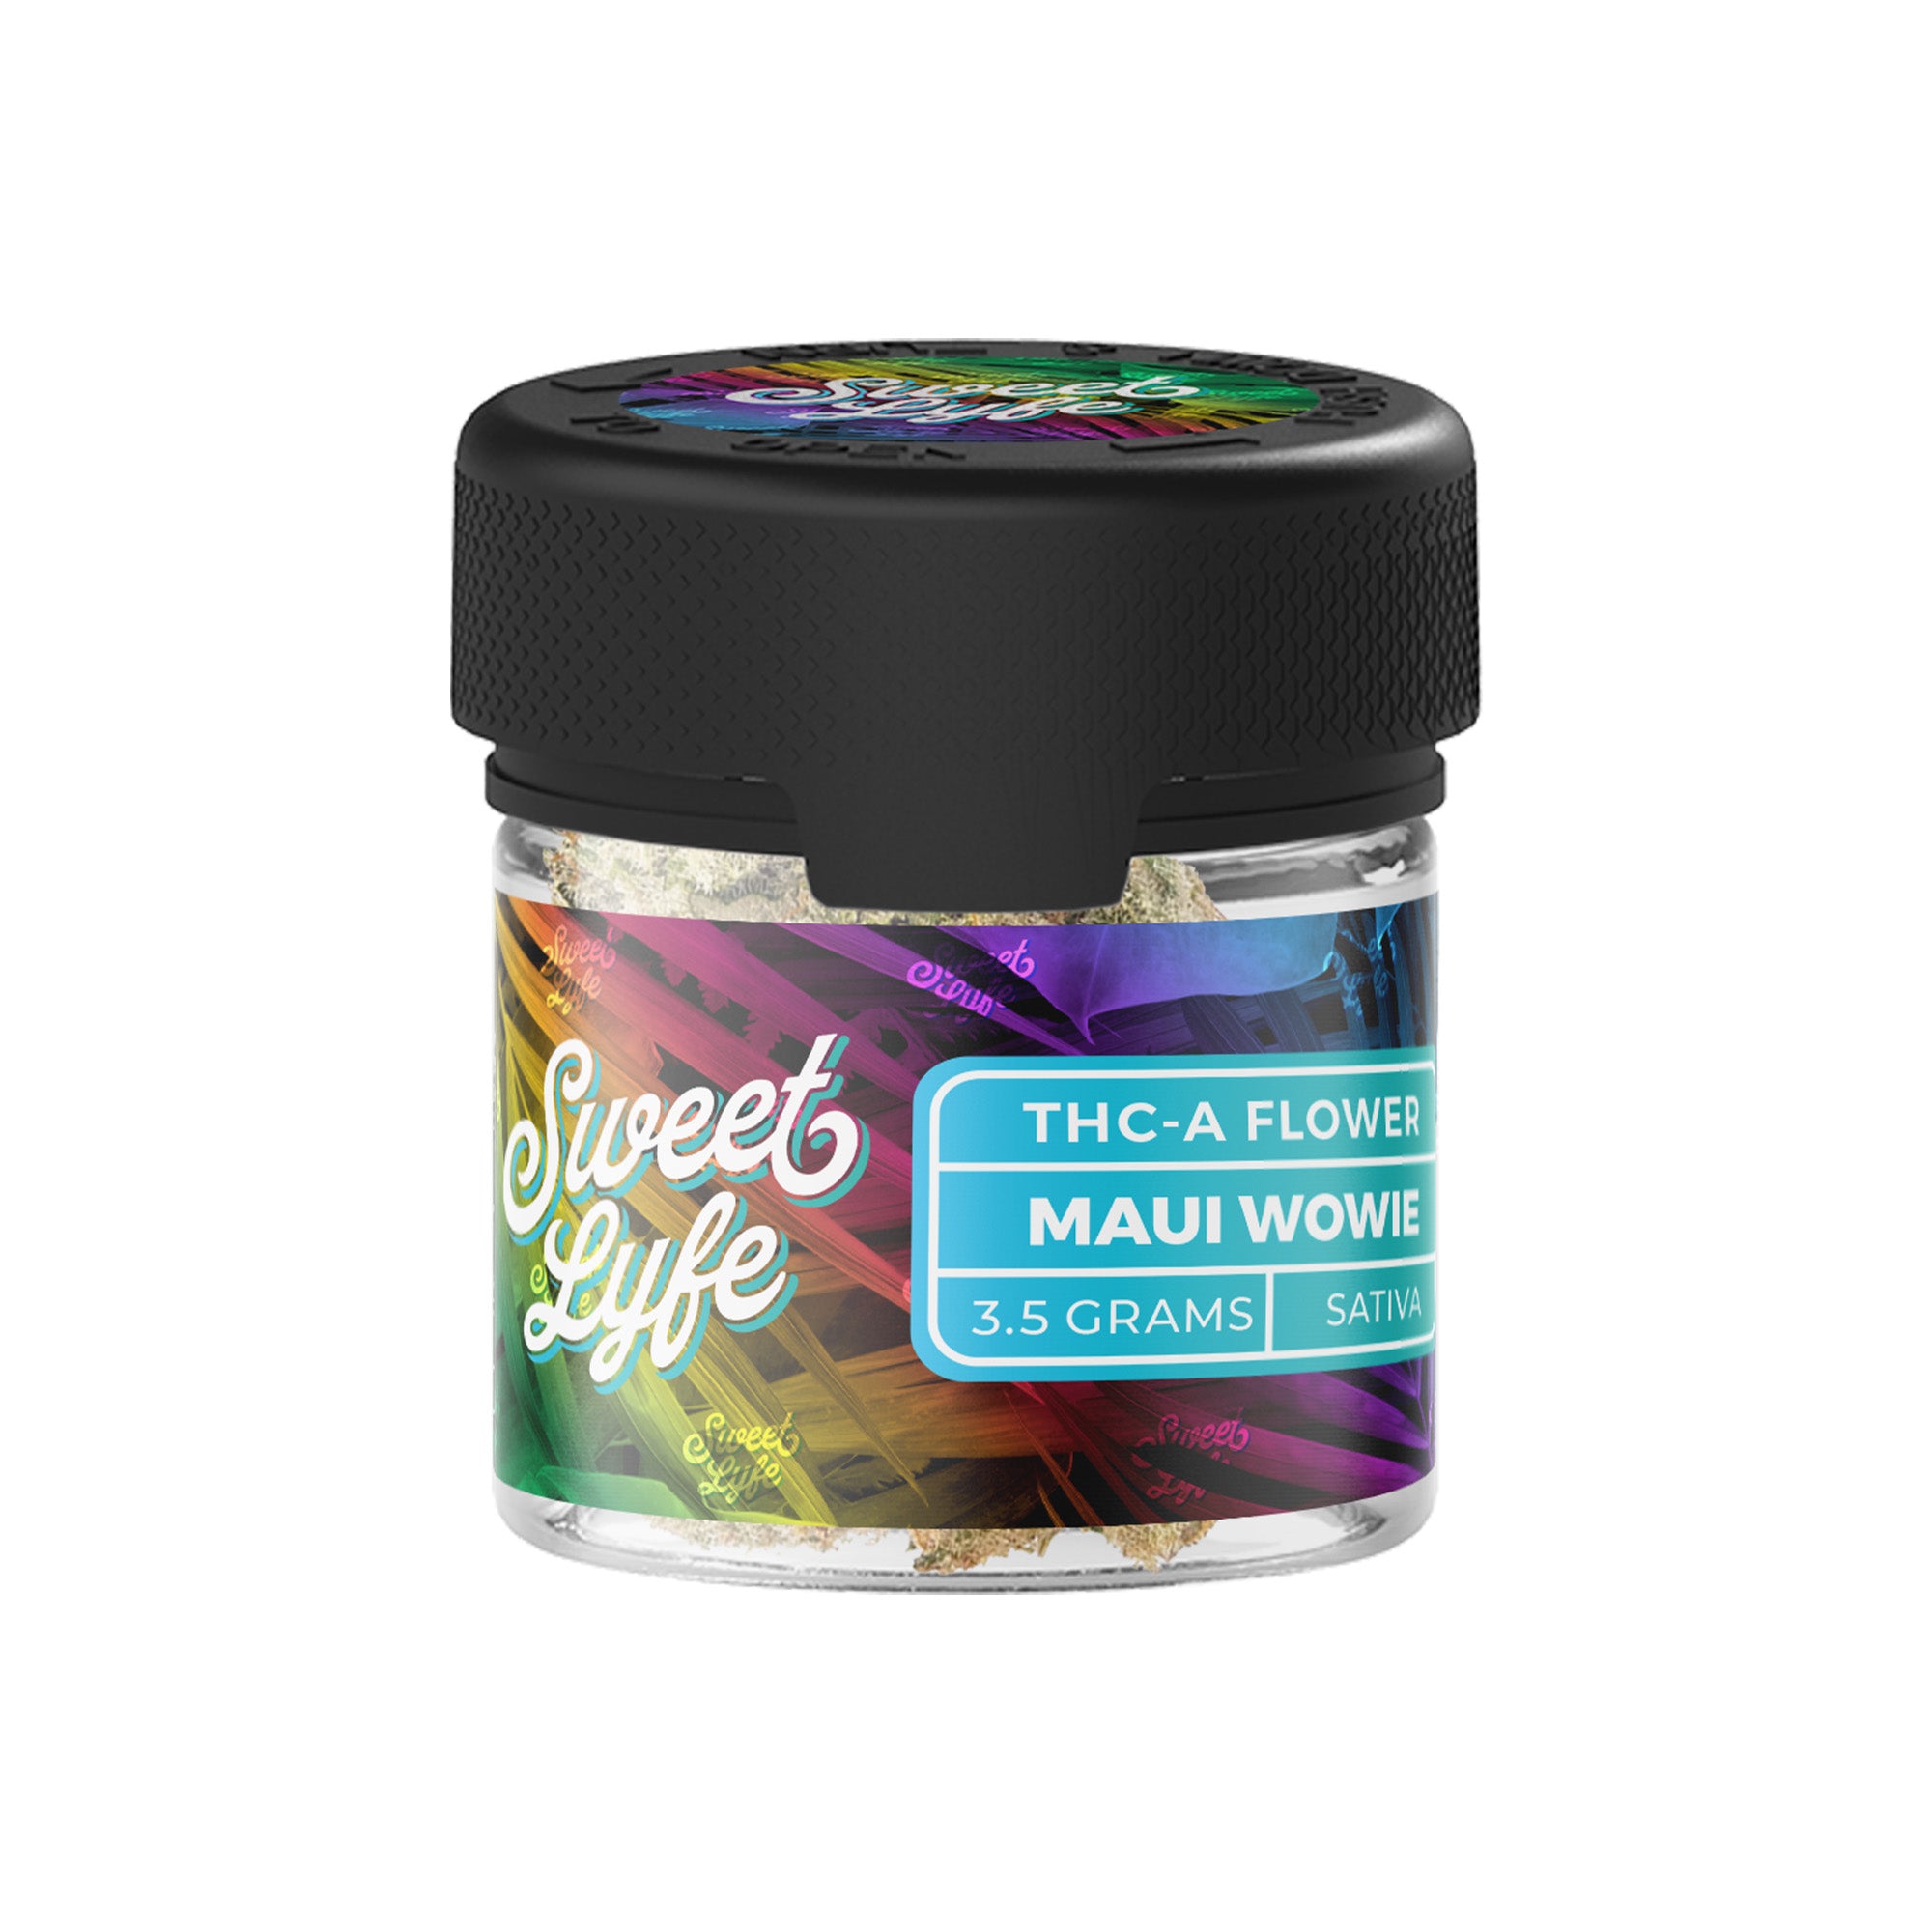 THC-A Flower - Maui Wowie - Sativa